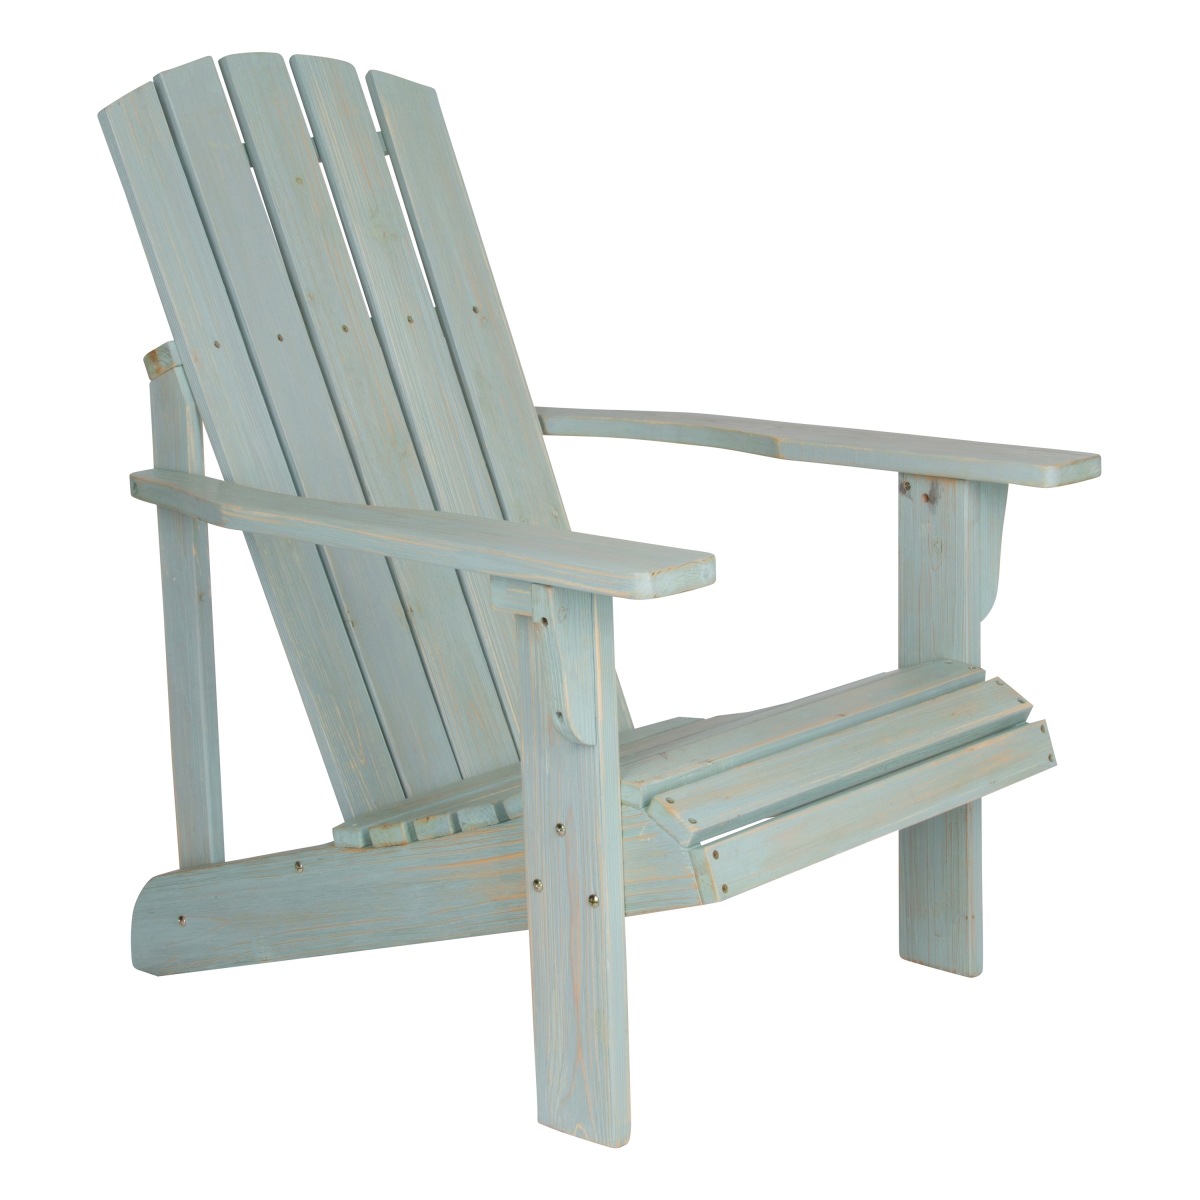 Lakewood Rustic Adirondack Chair, Dutch Blue